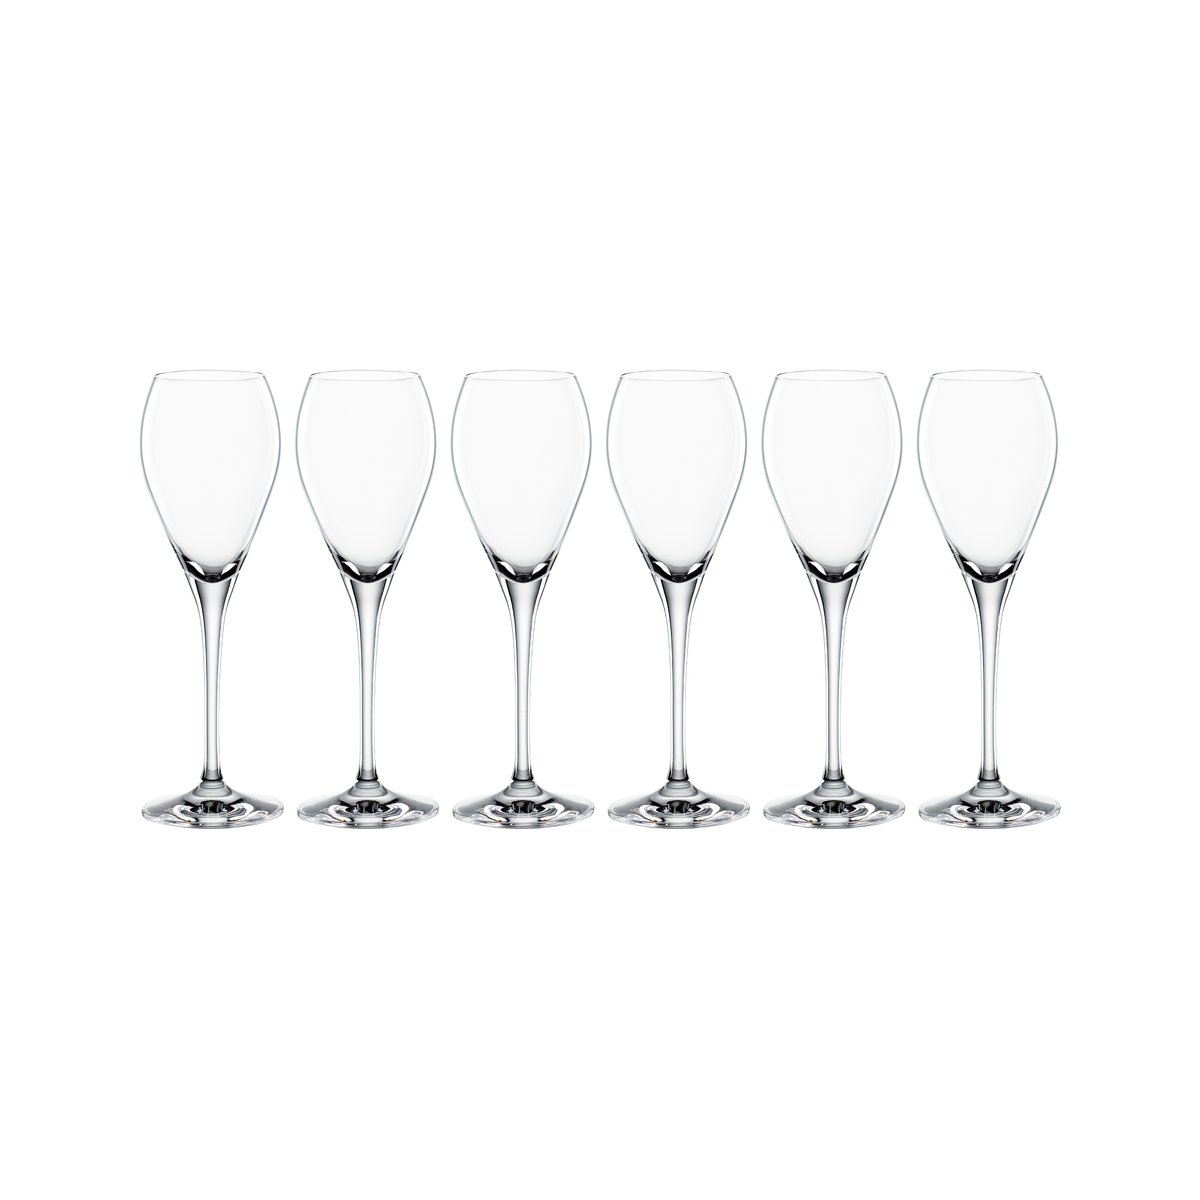 Spiegelau Party champagneglas – 6 stk. klar